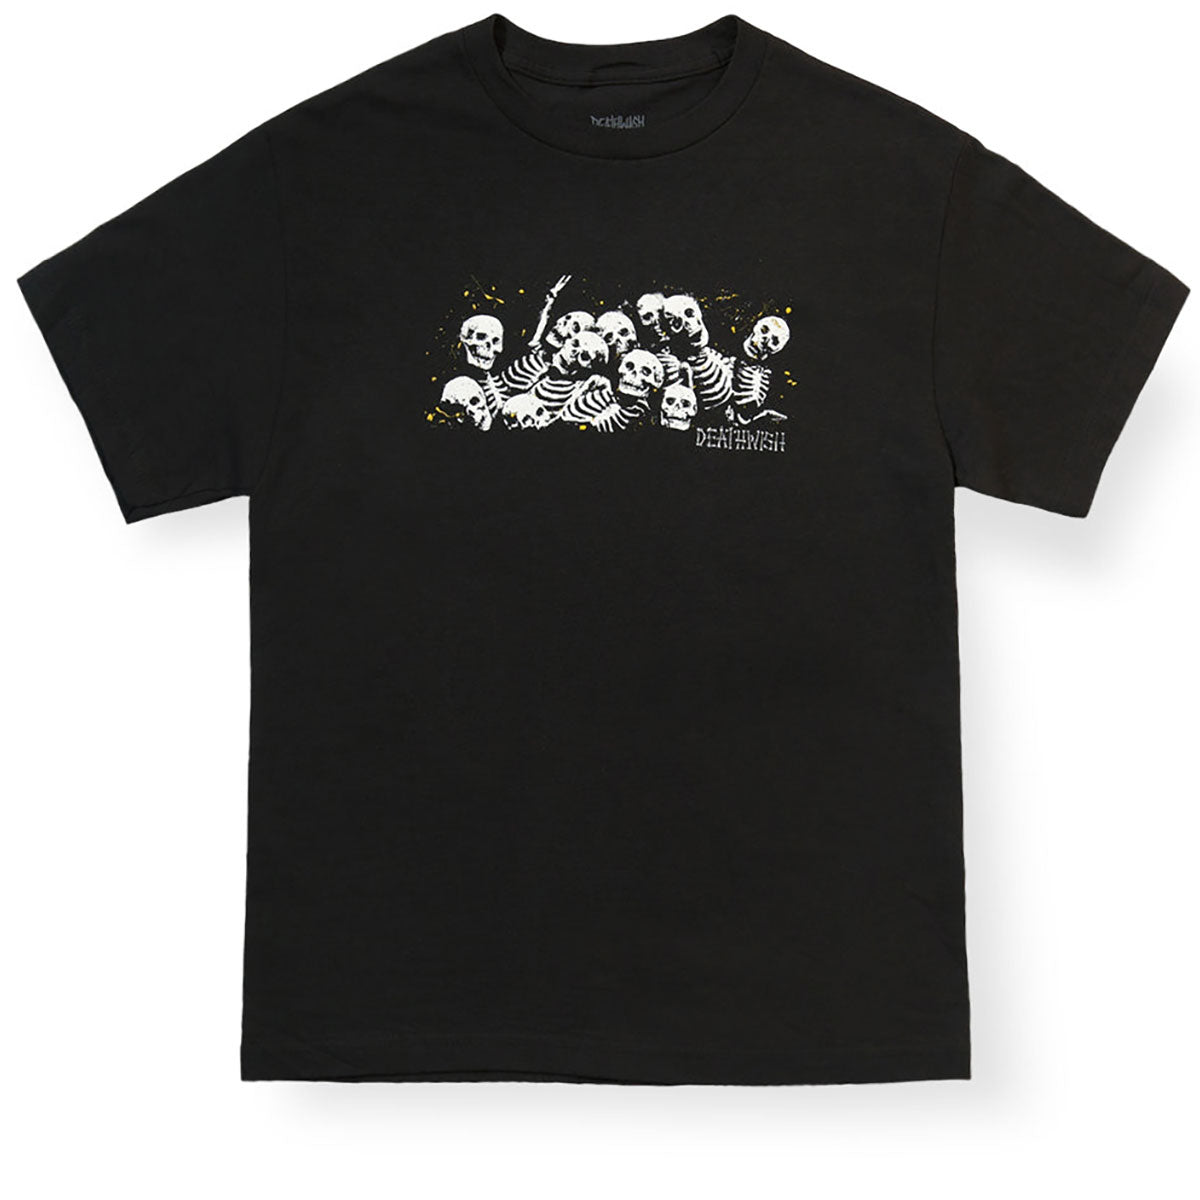 Deathwish Dead Know T-Shirt - Black image 1